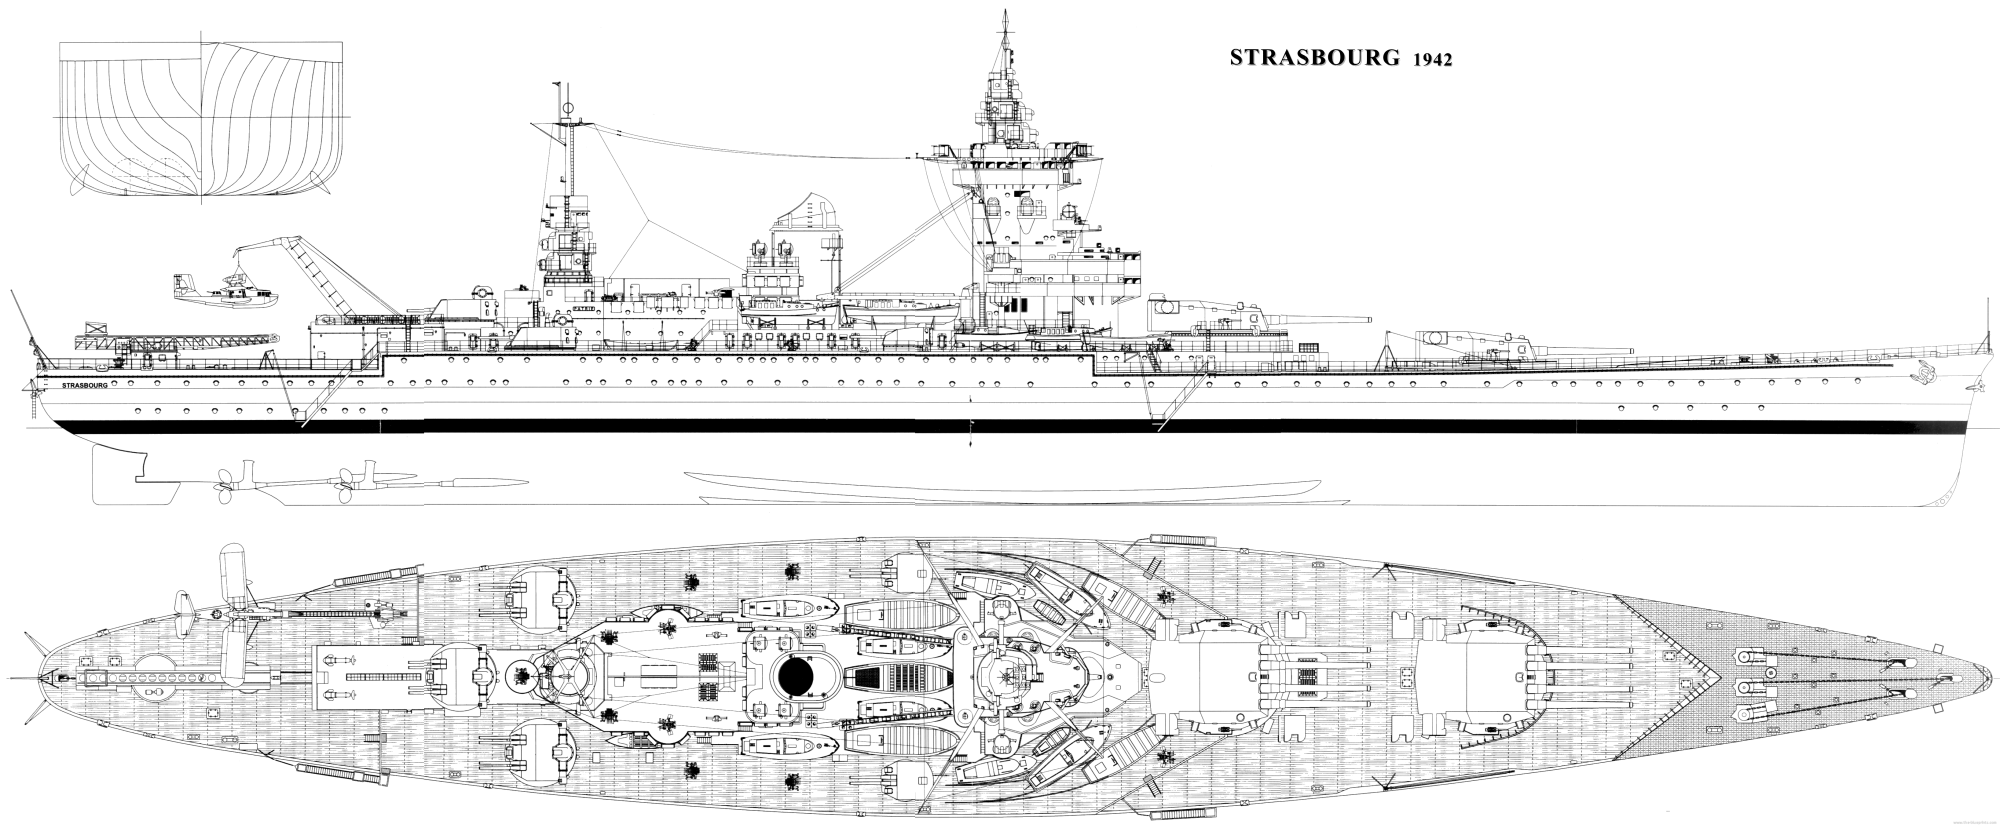 1706516534 844 Dunkerque and the Strasbourg Battleships